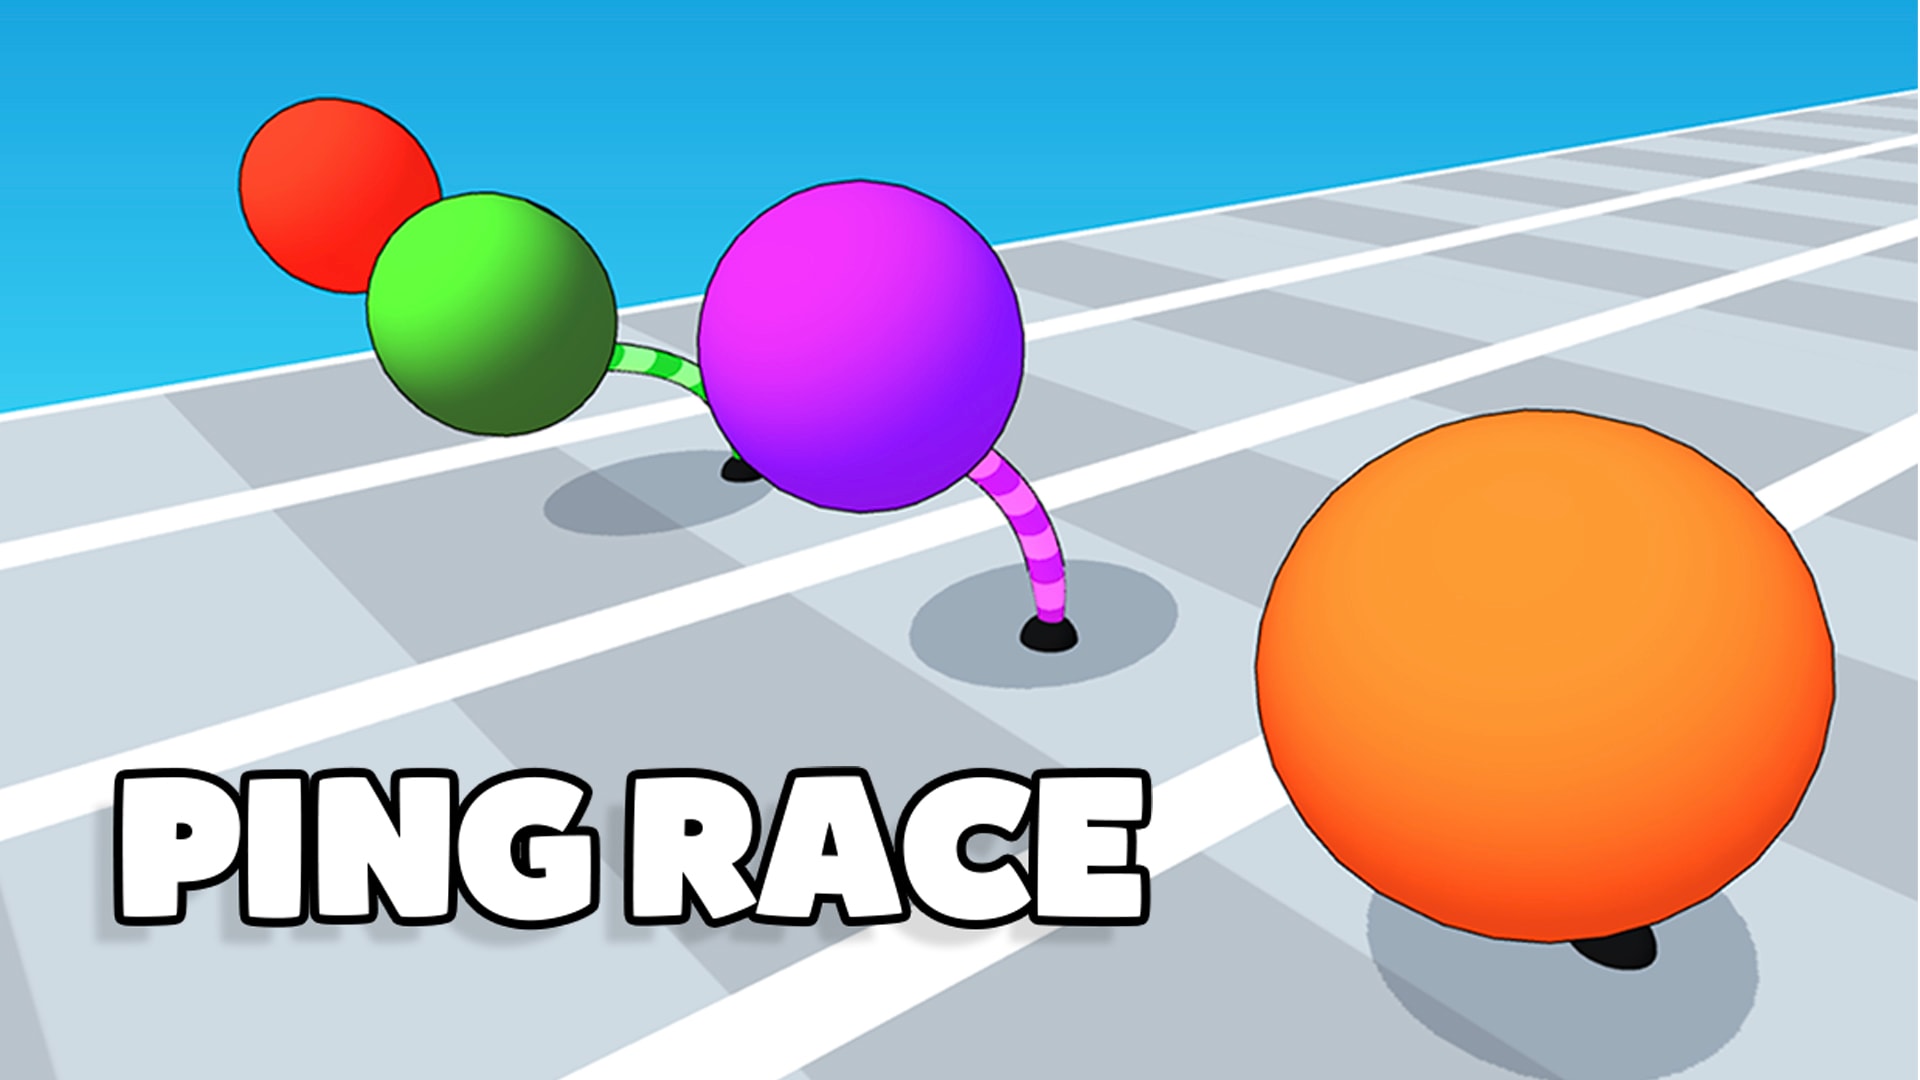 Ping Race 1